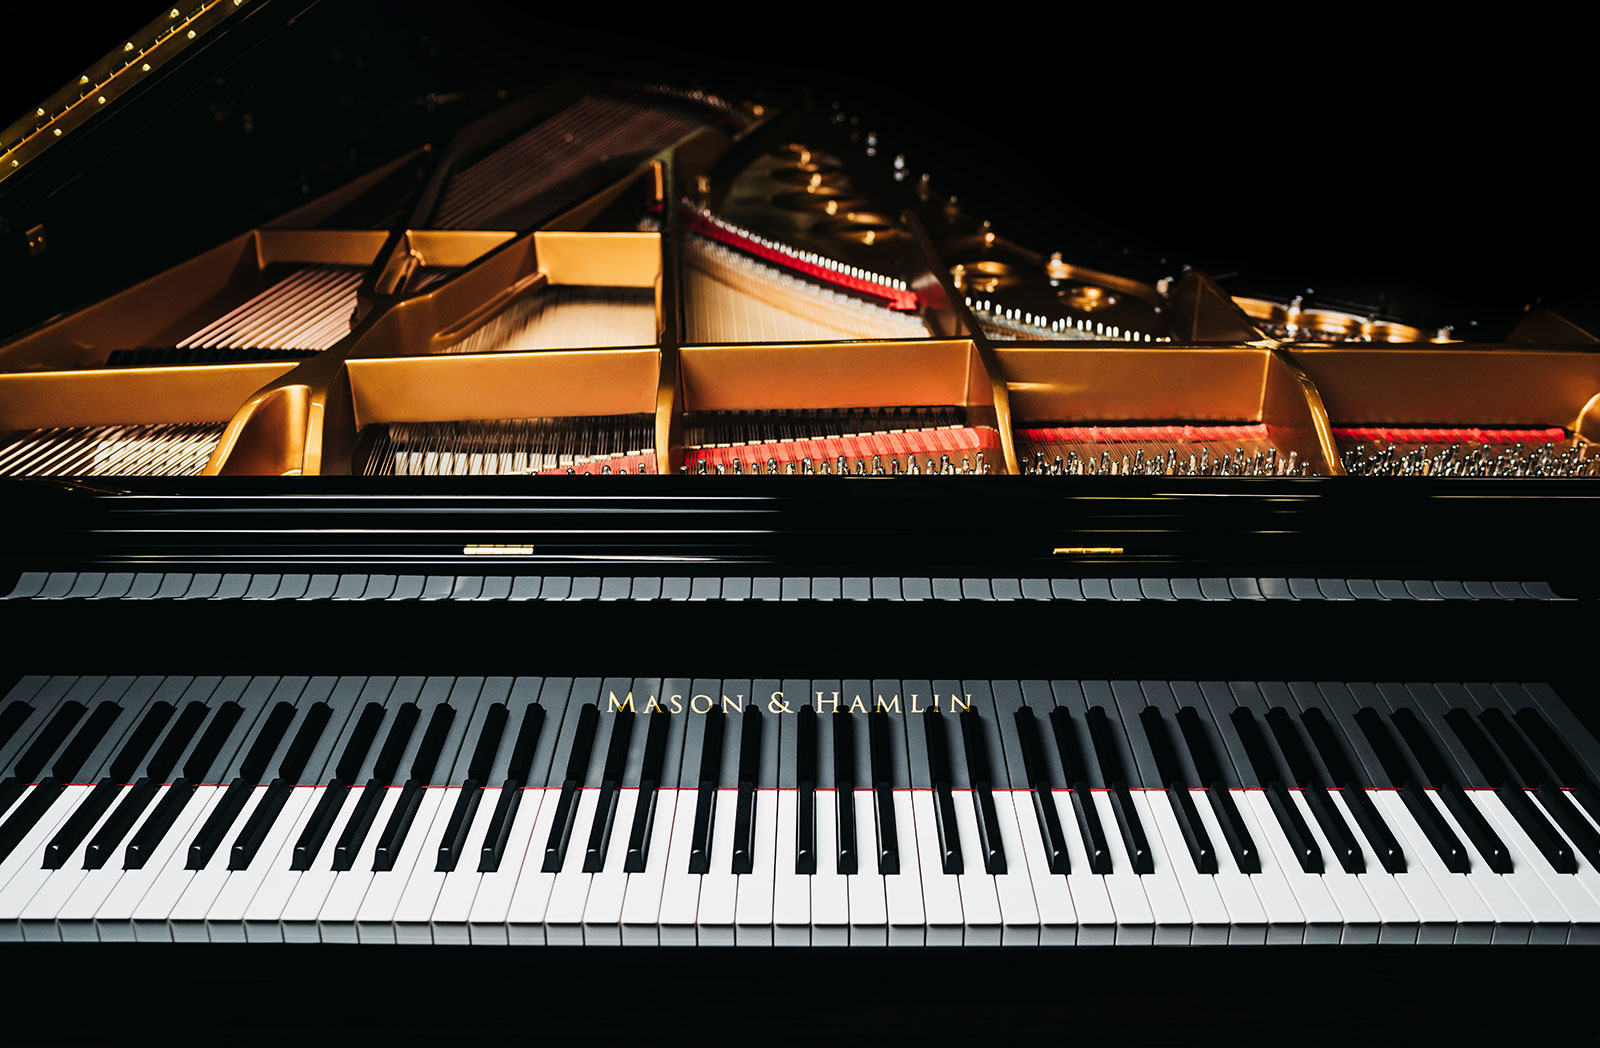 Piano player's view of keys and strings of a Mason & Hamlin grand piano